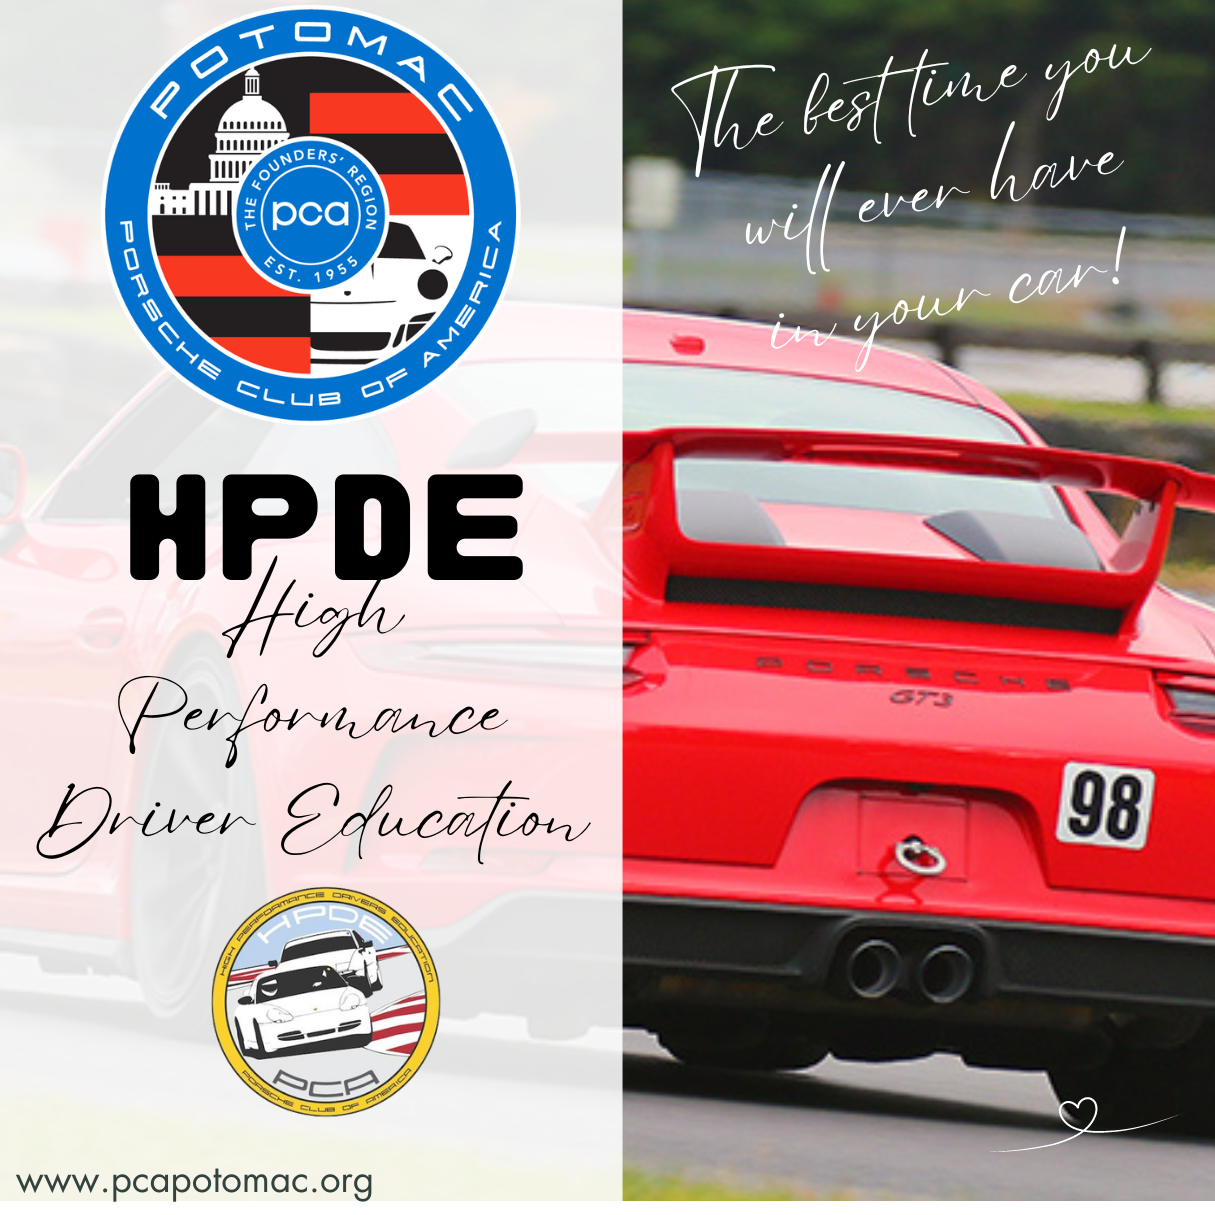 Porsche Club of America - Potomac - High Performance Driver Education - Watkins Glen